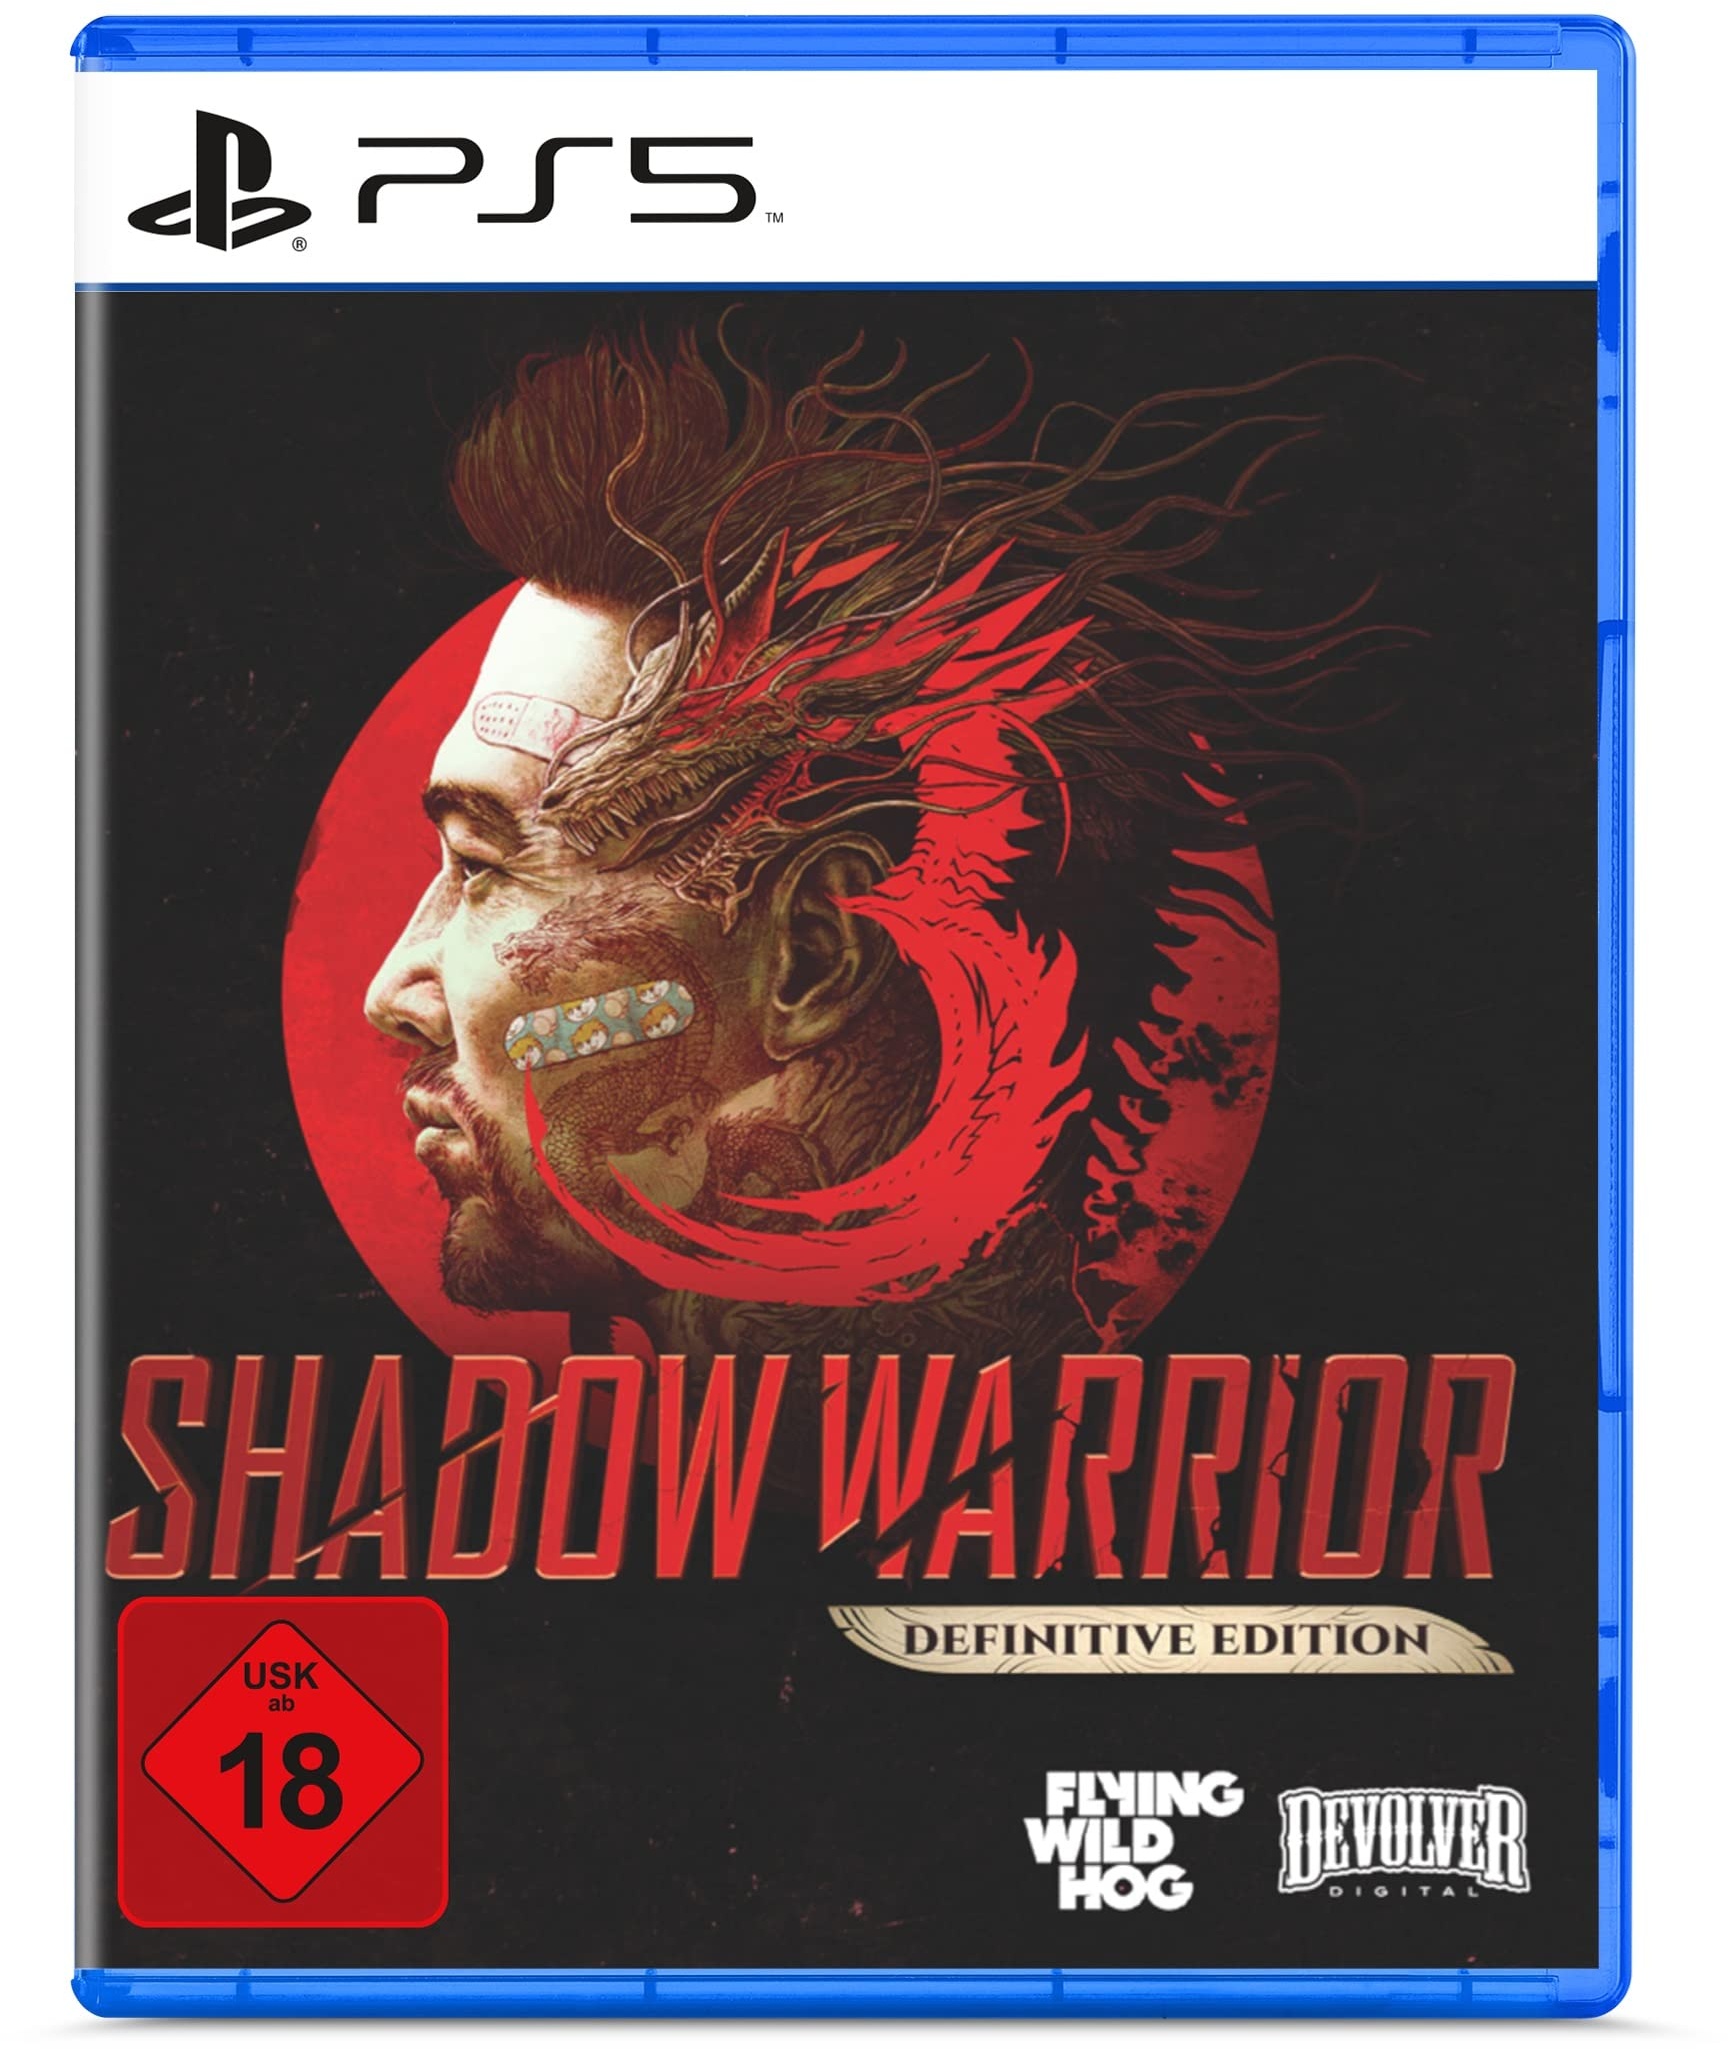 Shadow Warrior 3: Definitive Edition - PS5